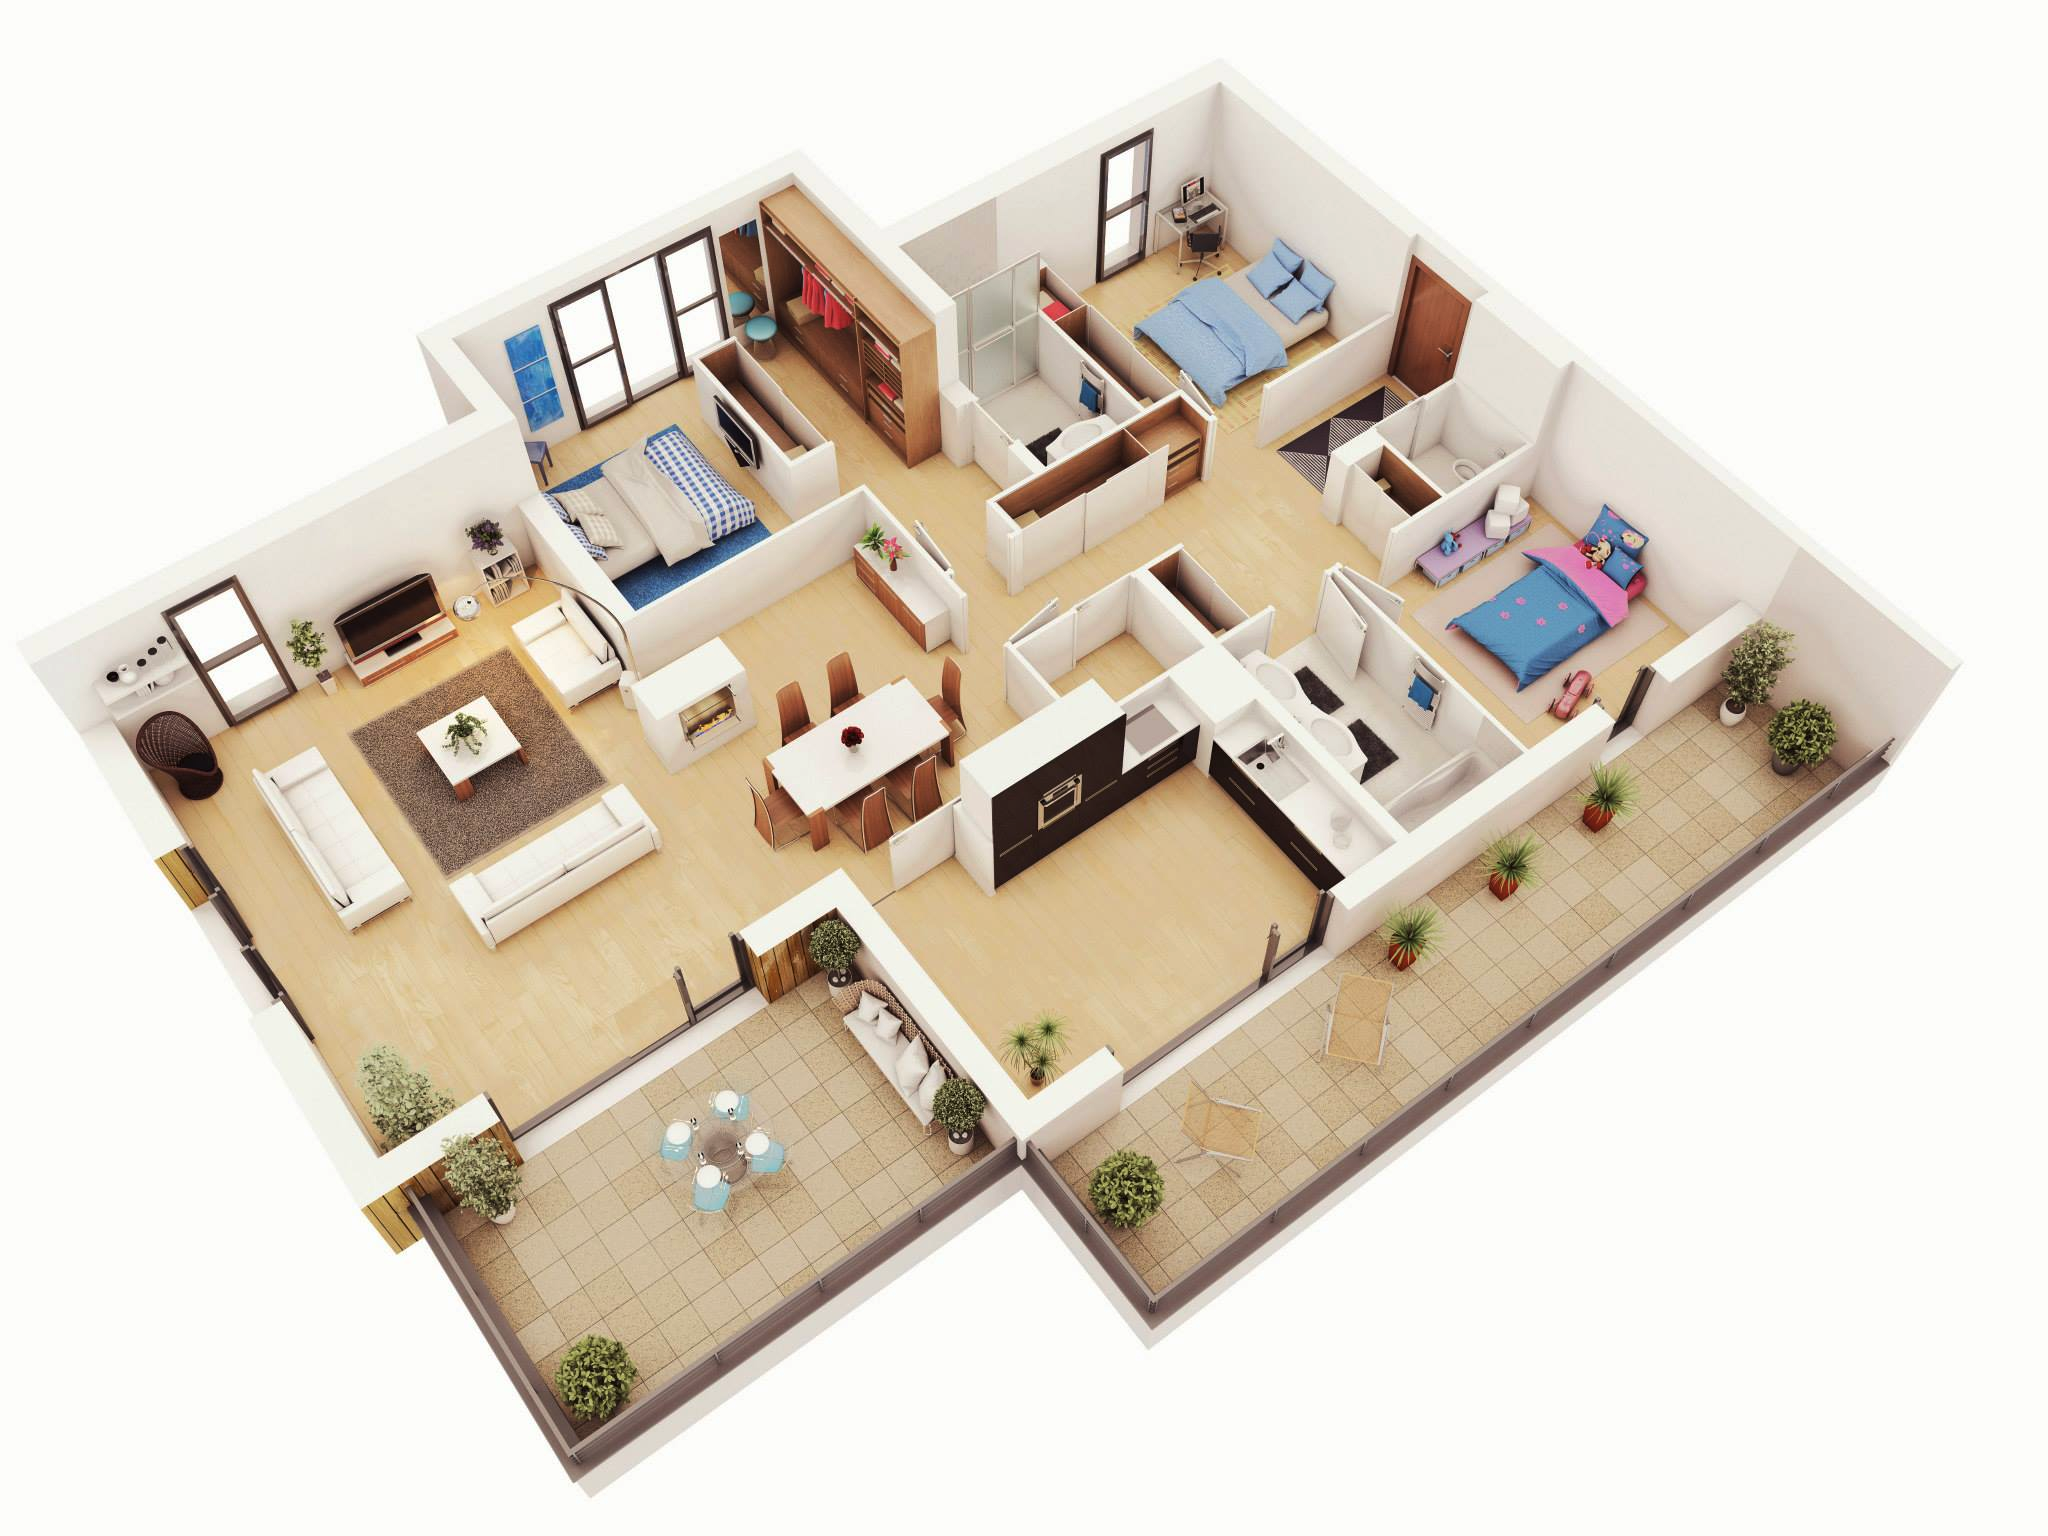 images 3 Bedroom Bungalow House Floor Plans 3D interior design ideas